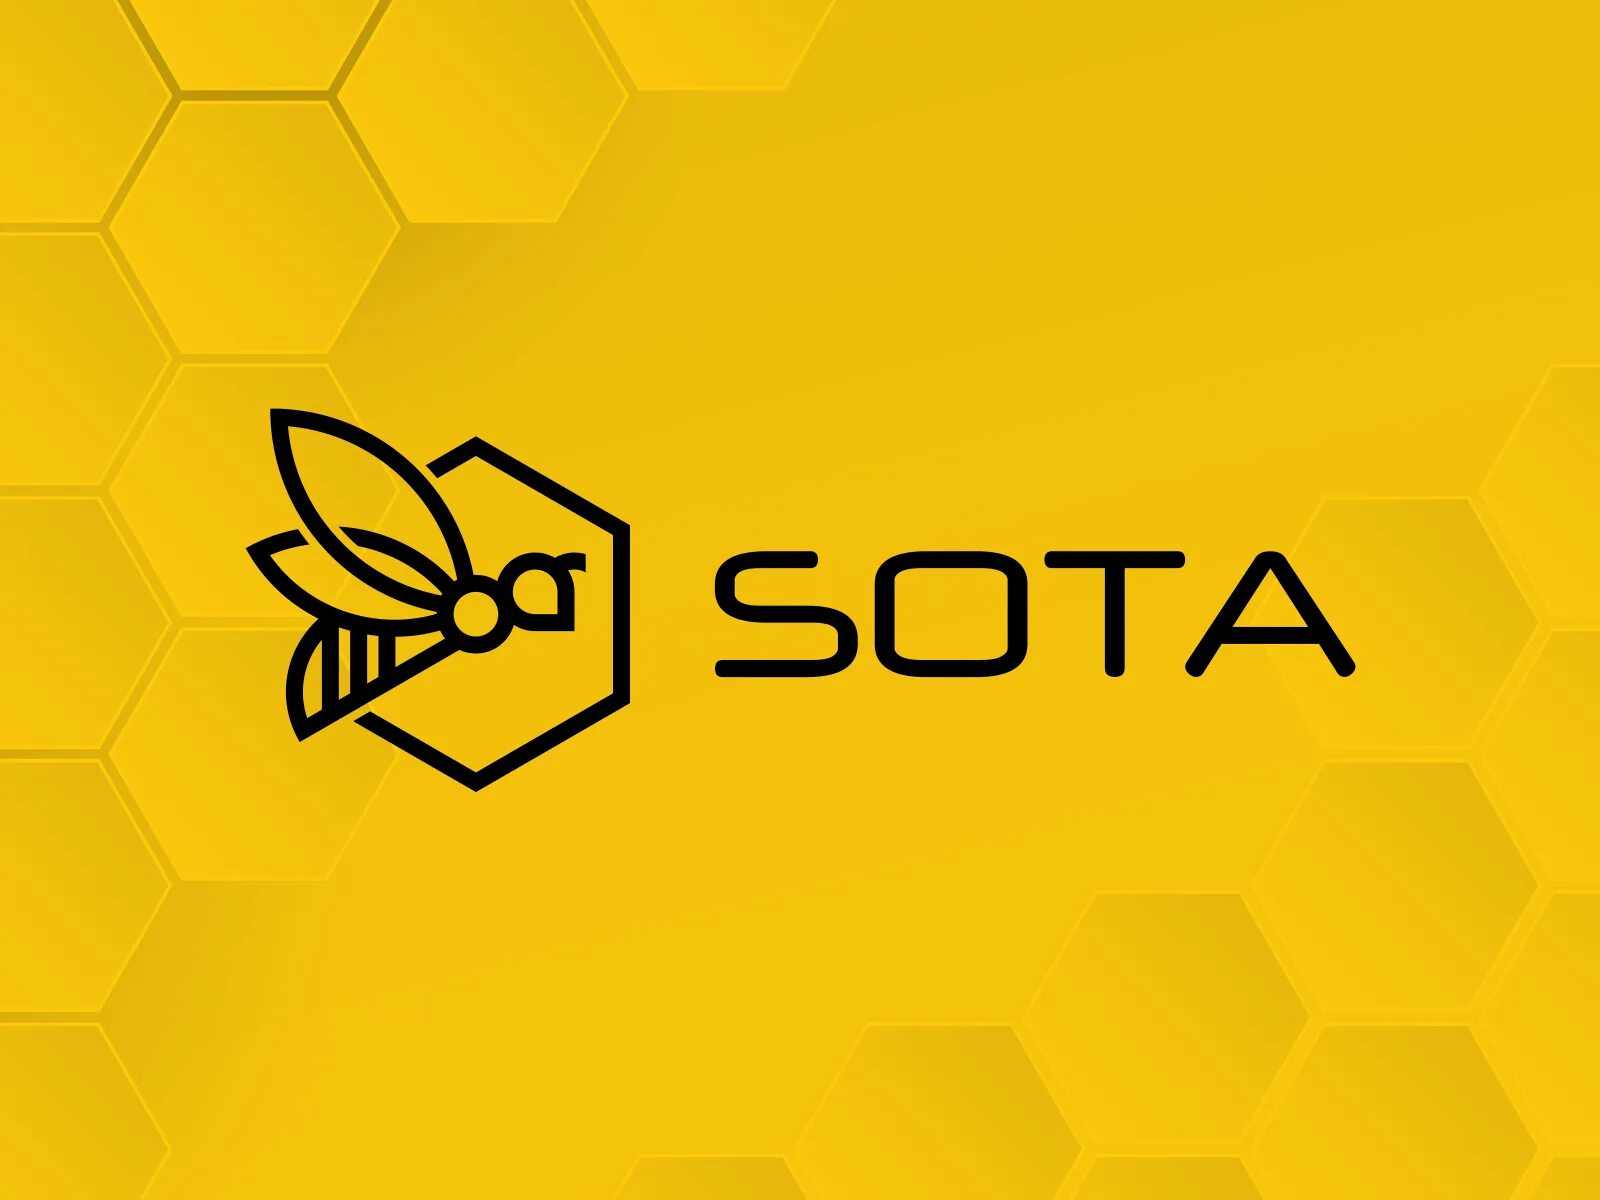 Пропусти сота. Логотип соты. Логотип пчелиные соты. Логотип соты пчелы. Соты дизайн логотипа.